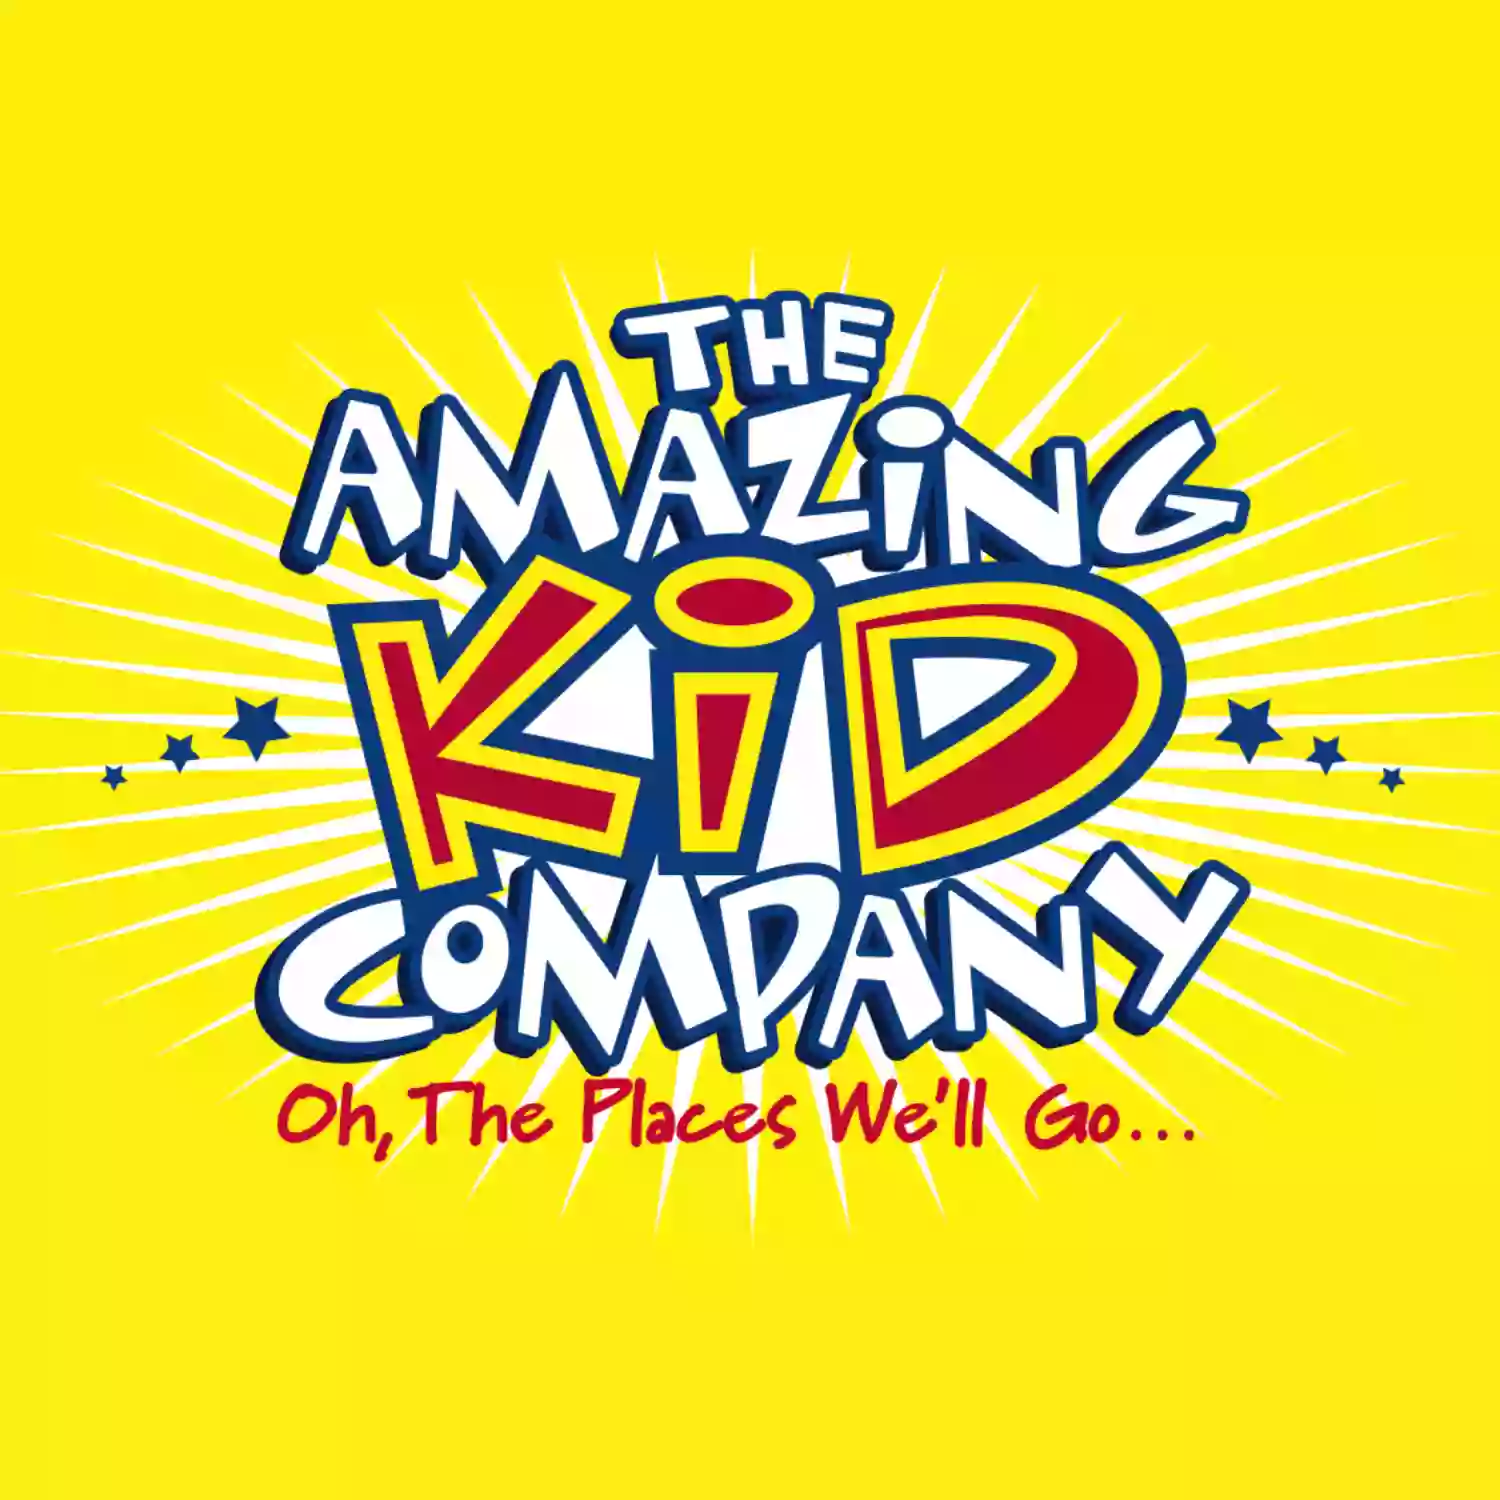 The Amazing Kid Company